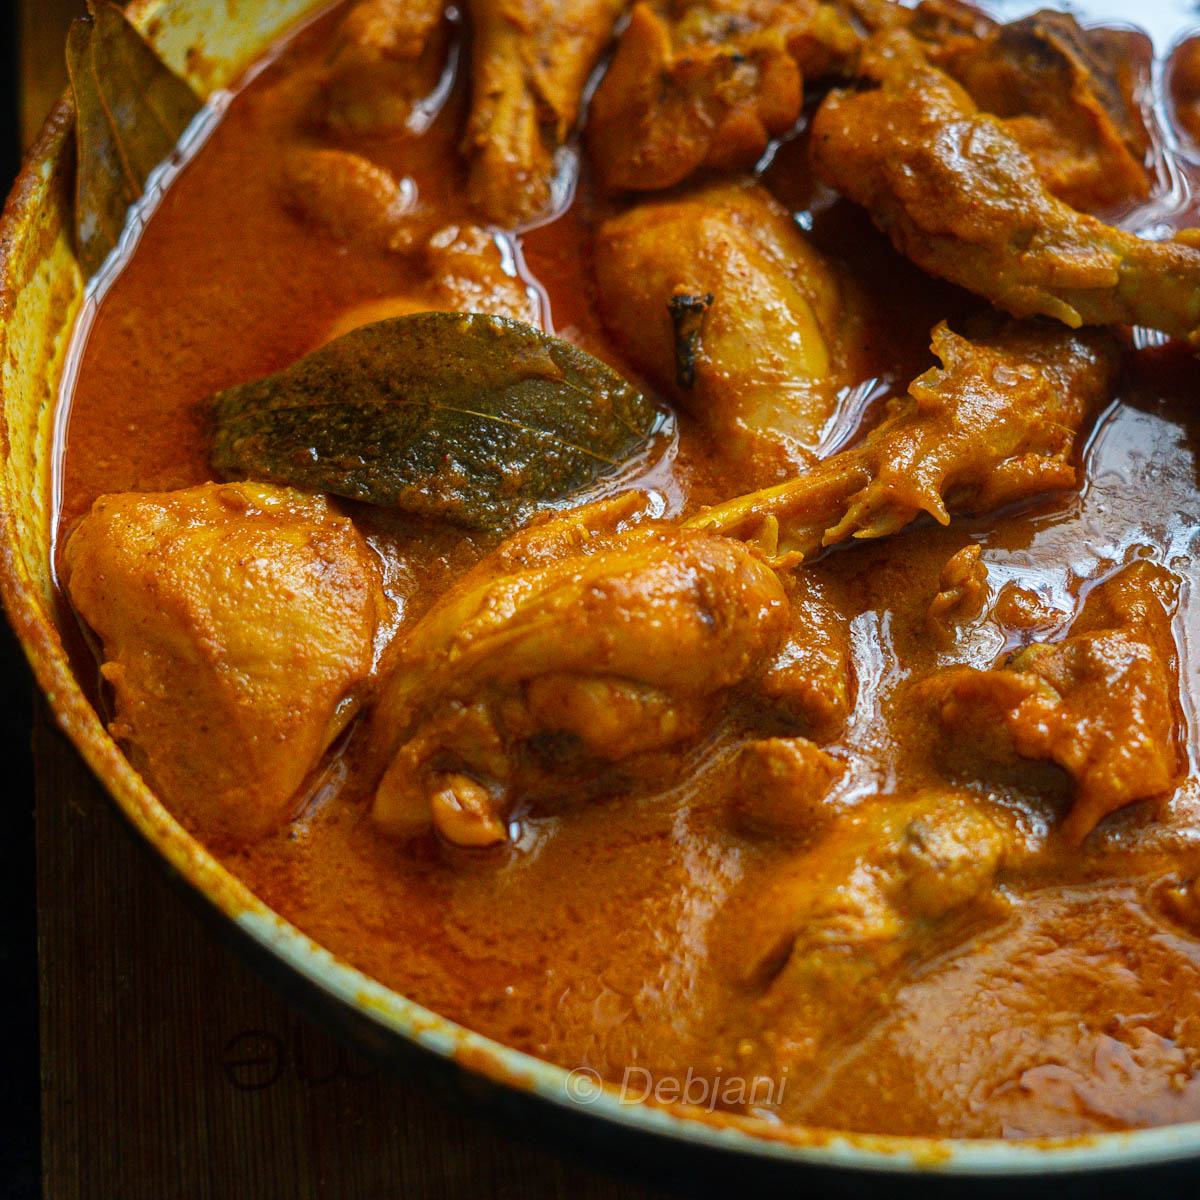 %quick chicken curry Recipe for beginners Debjanir rannaghar